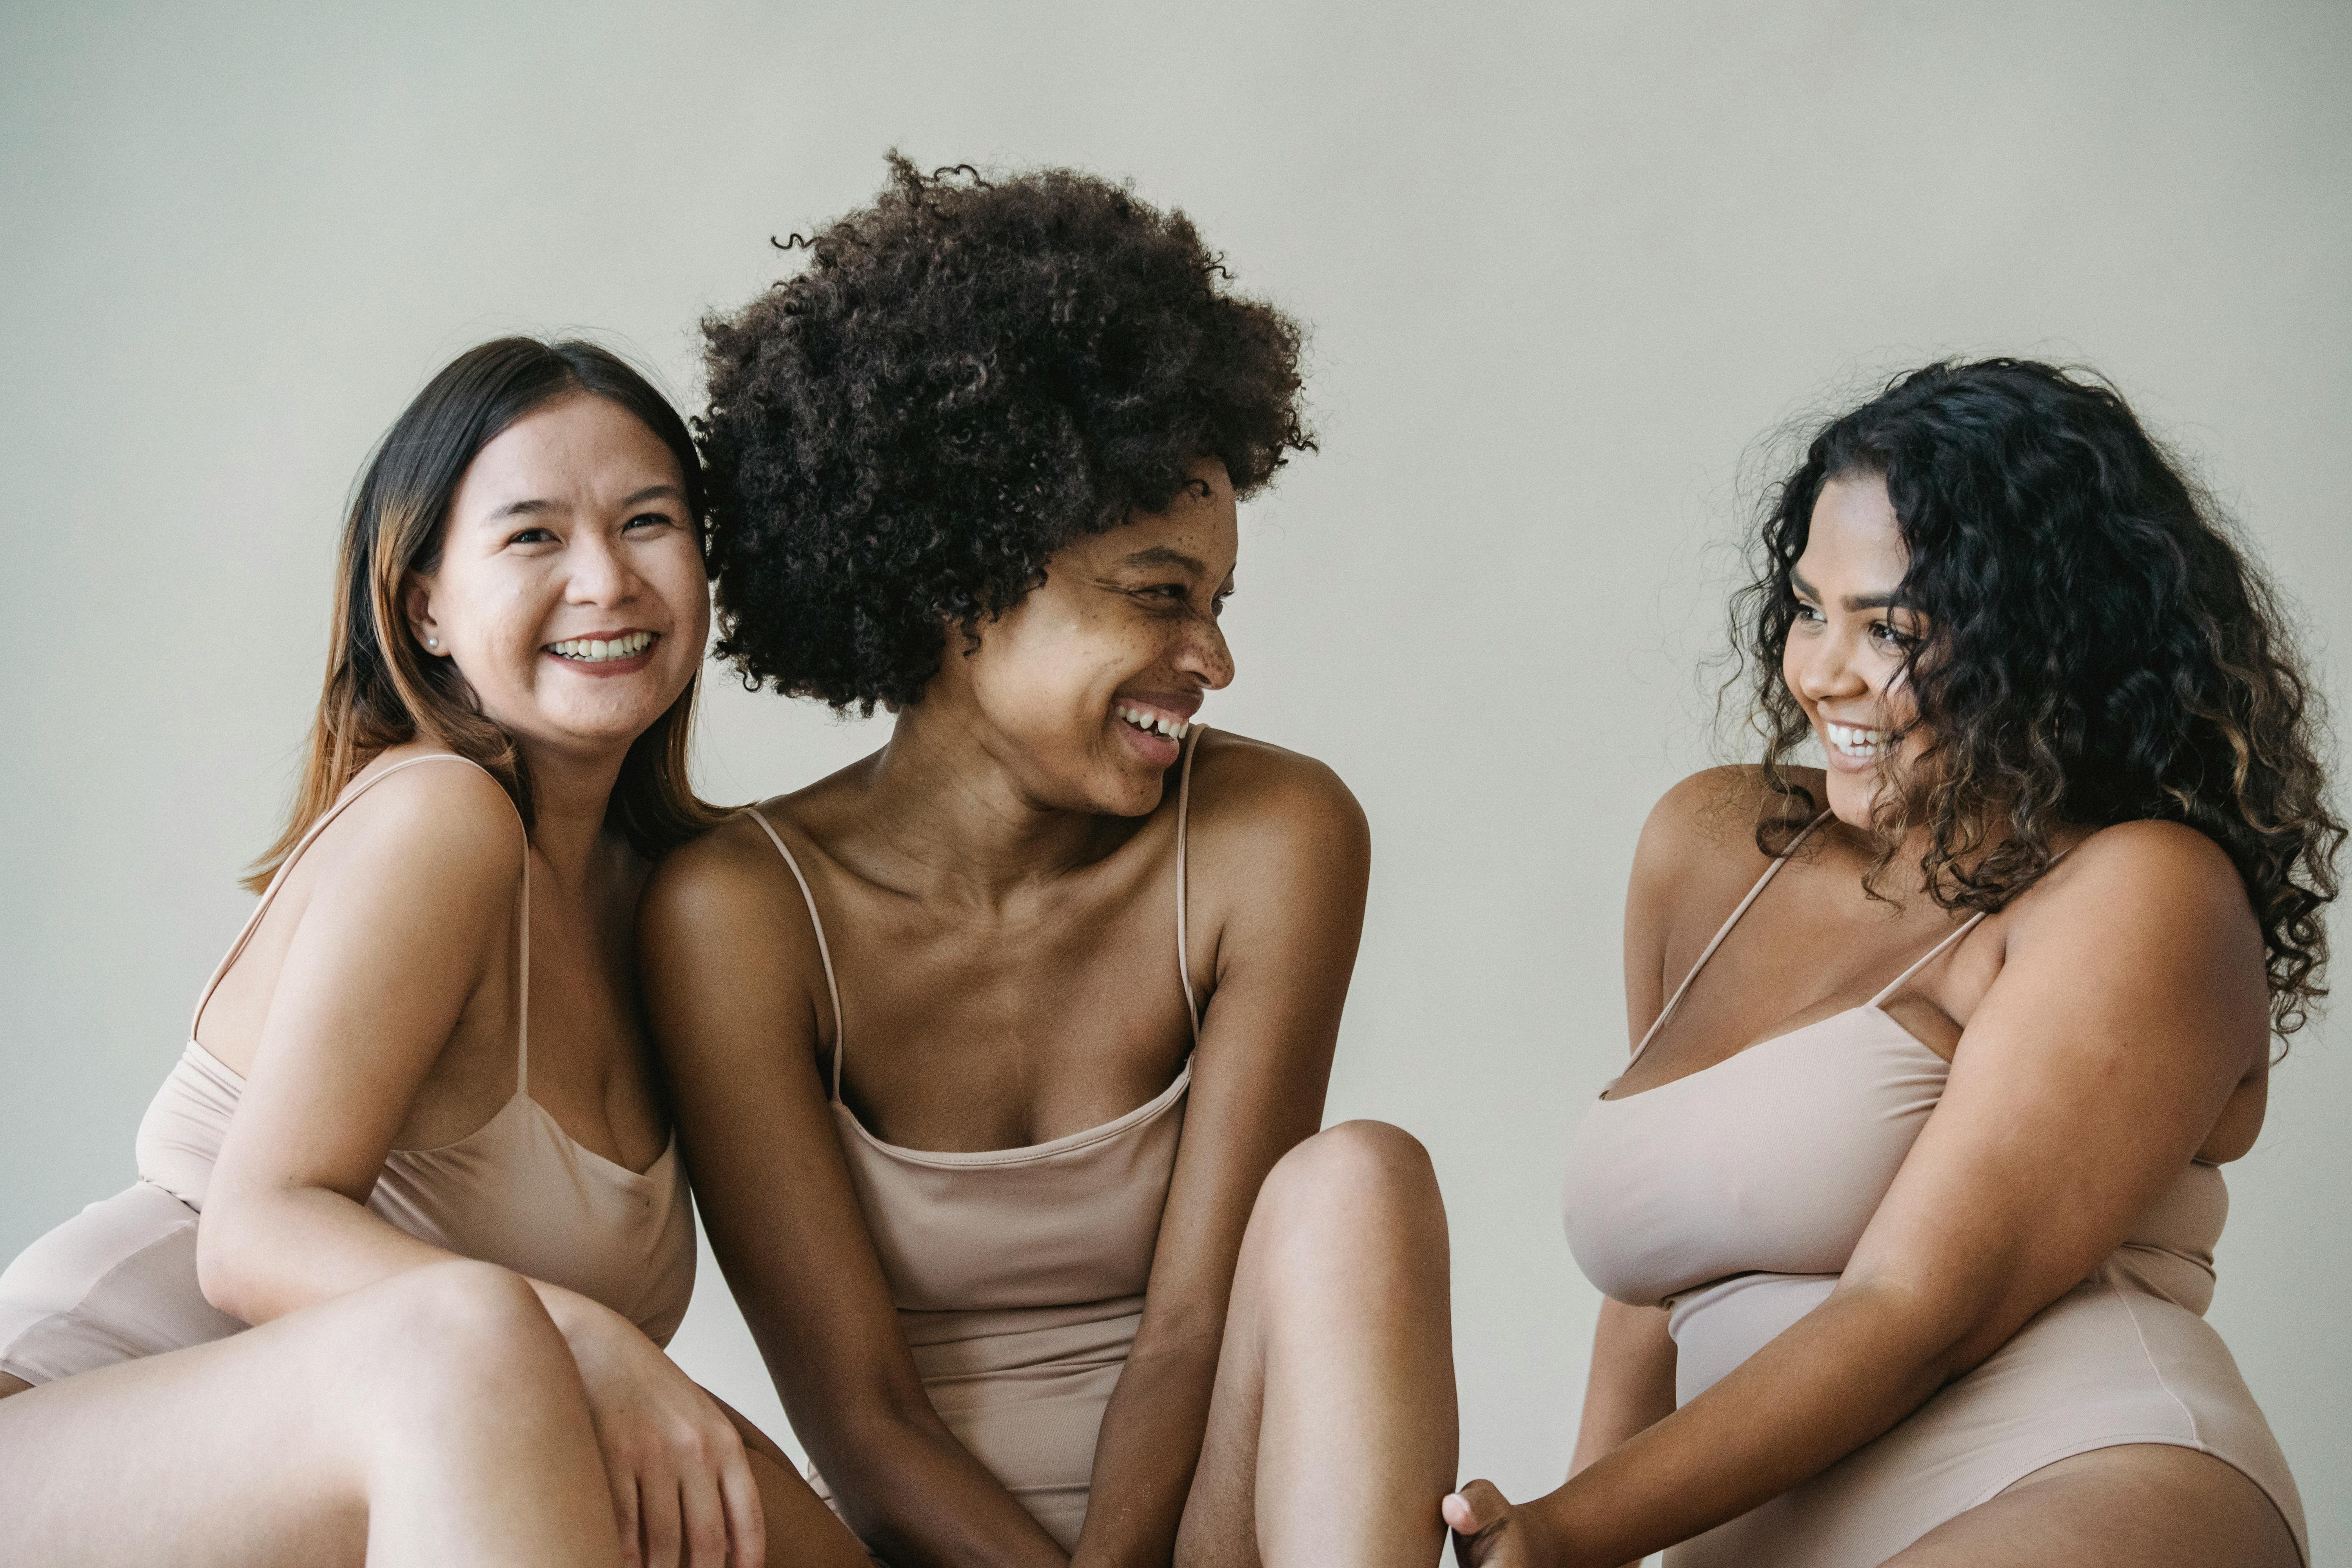 Women Posing in Nude Bodysuits Smiling · Free Stock Photo image